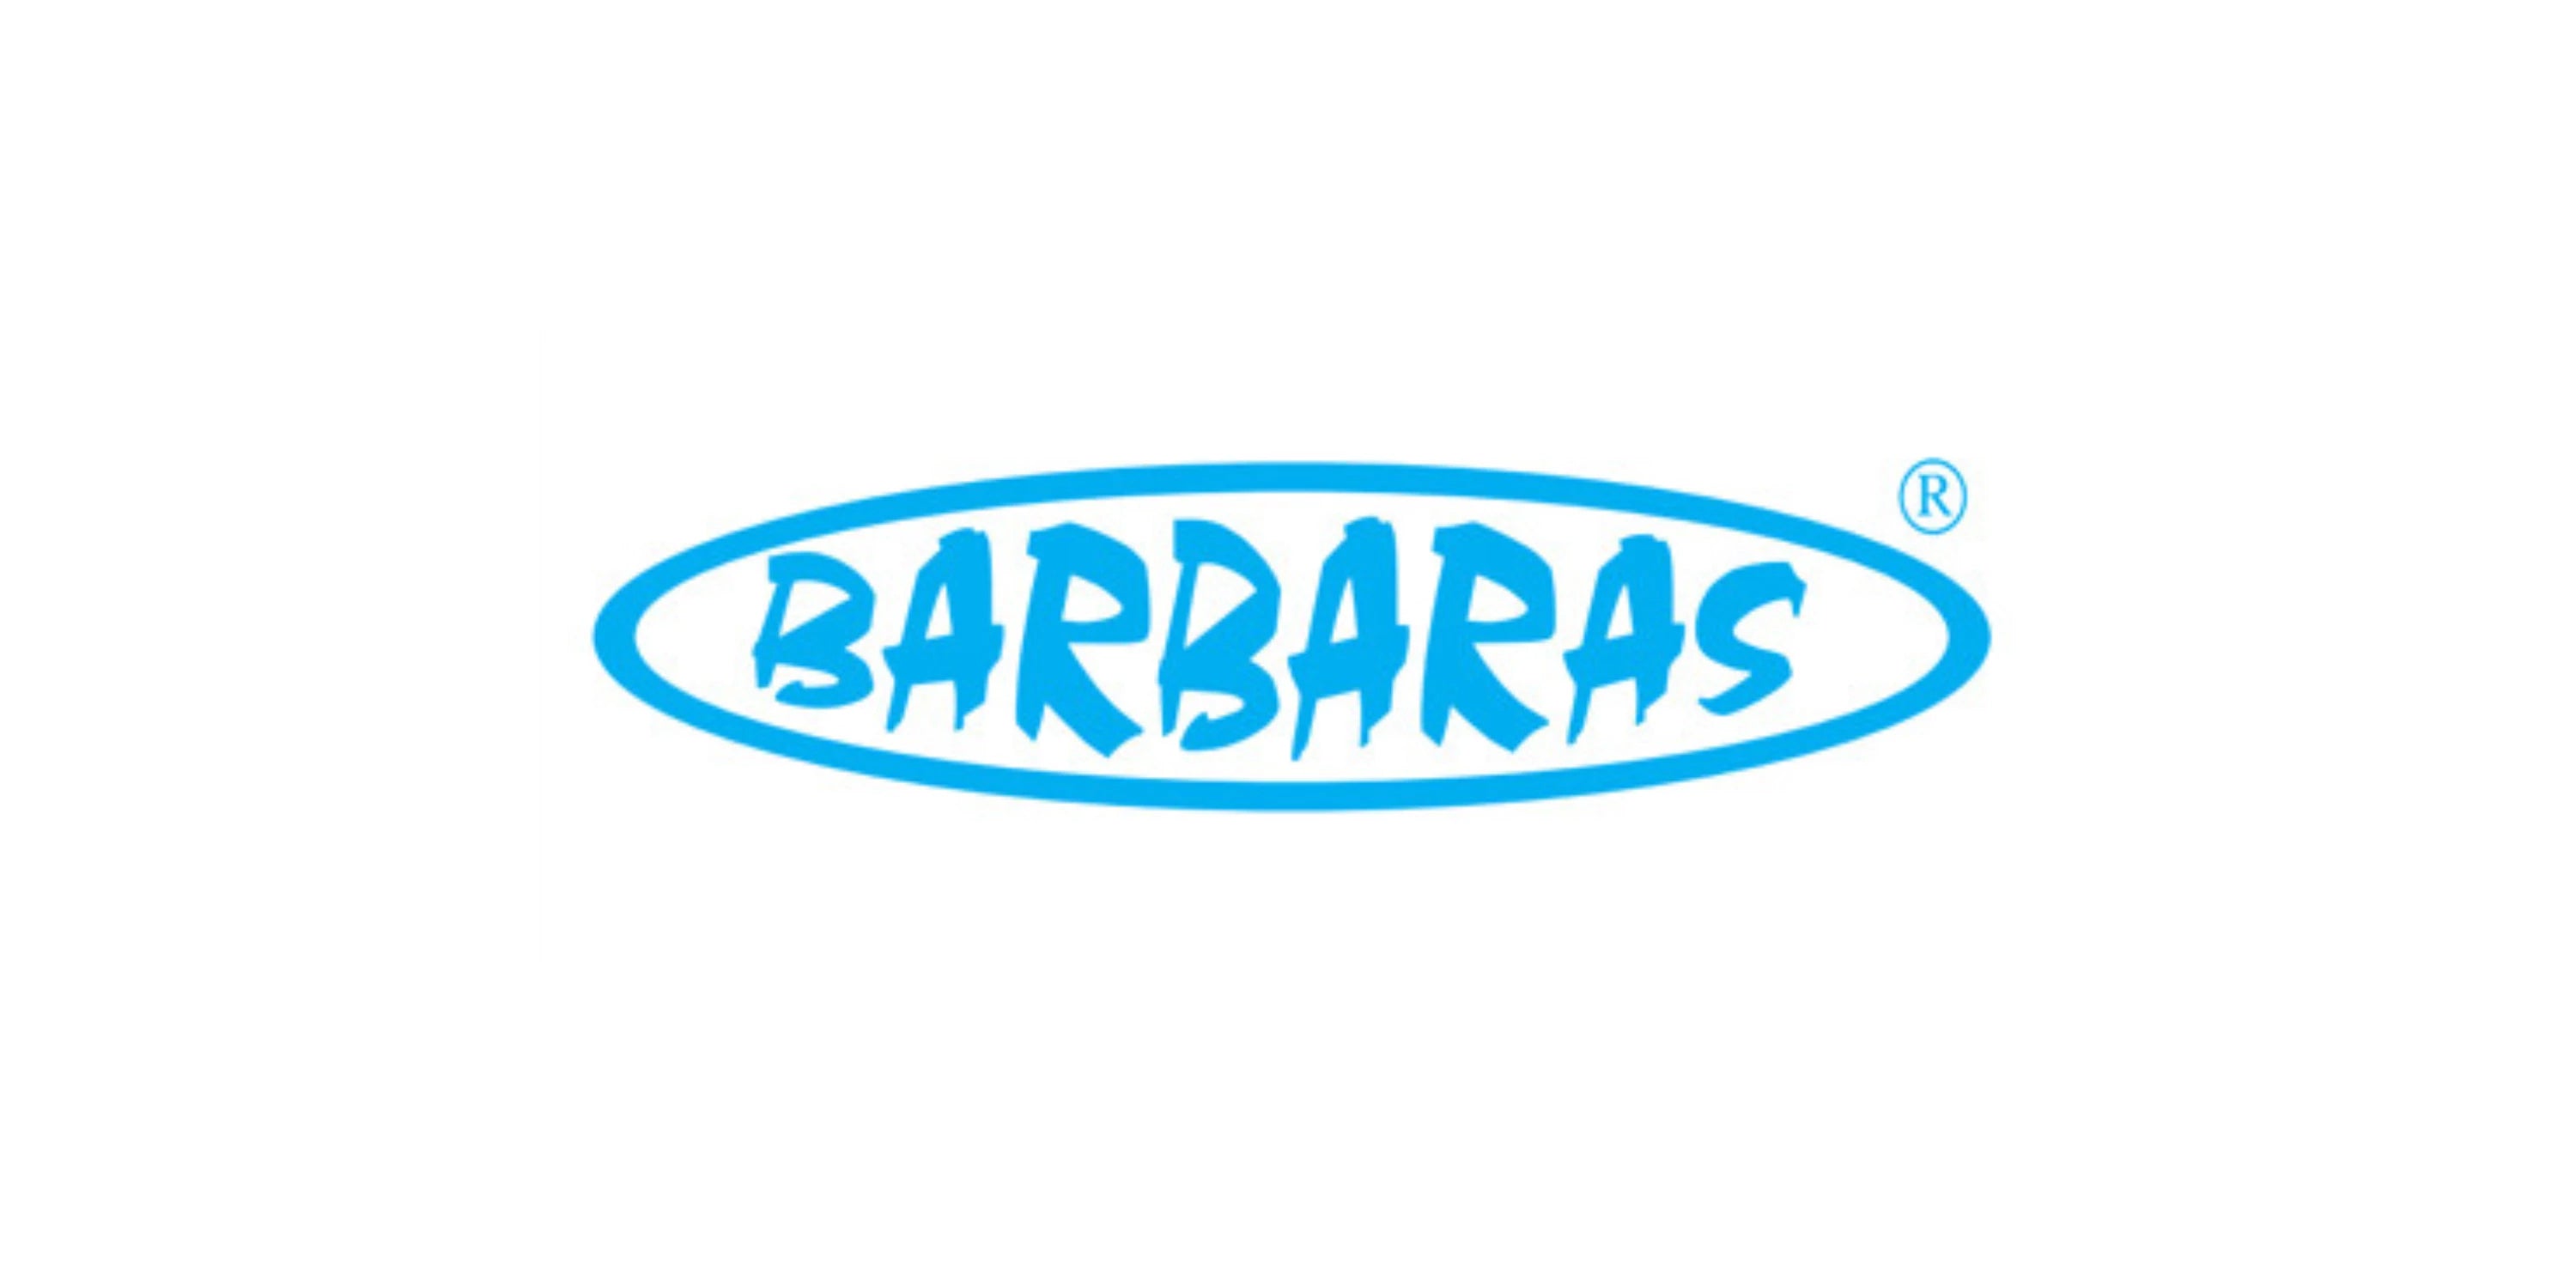 Luxury kids - brand: Barbaras